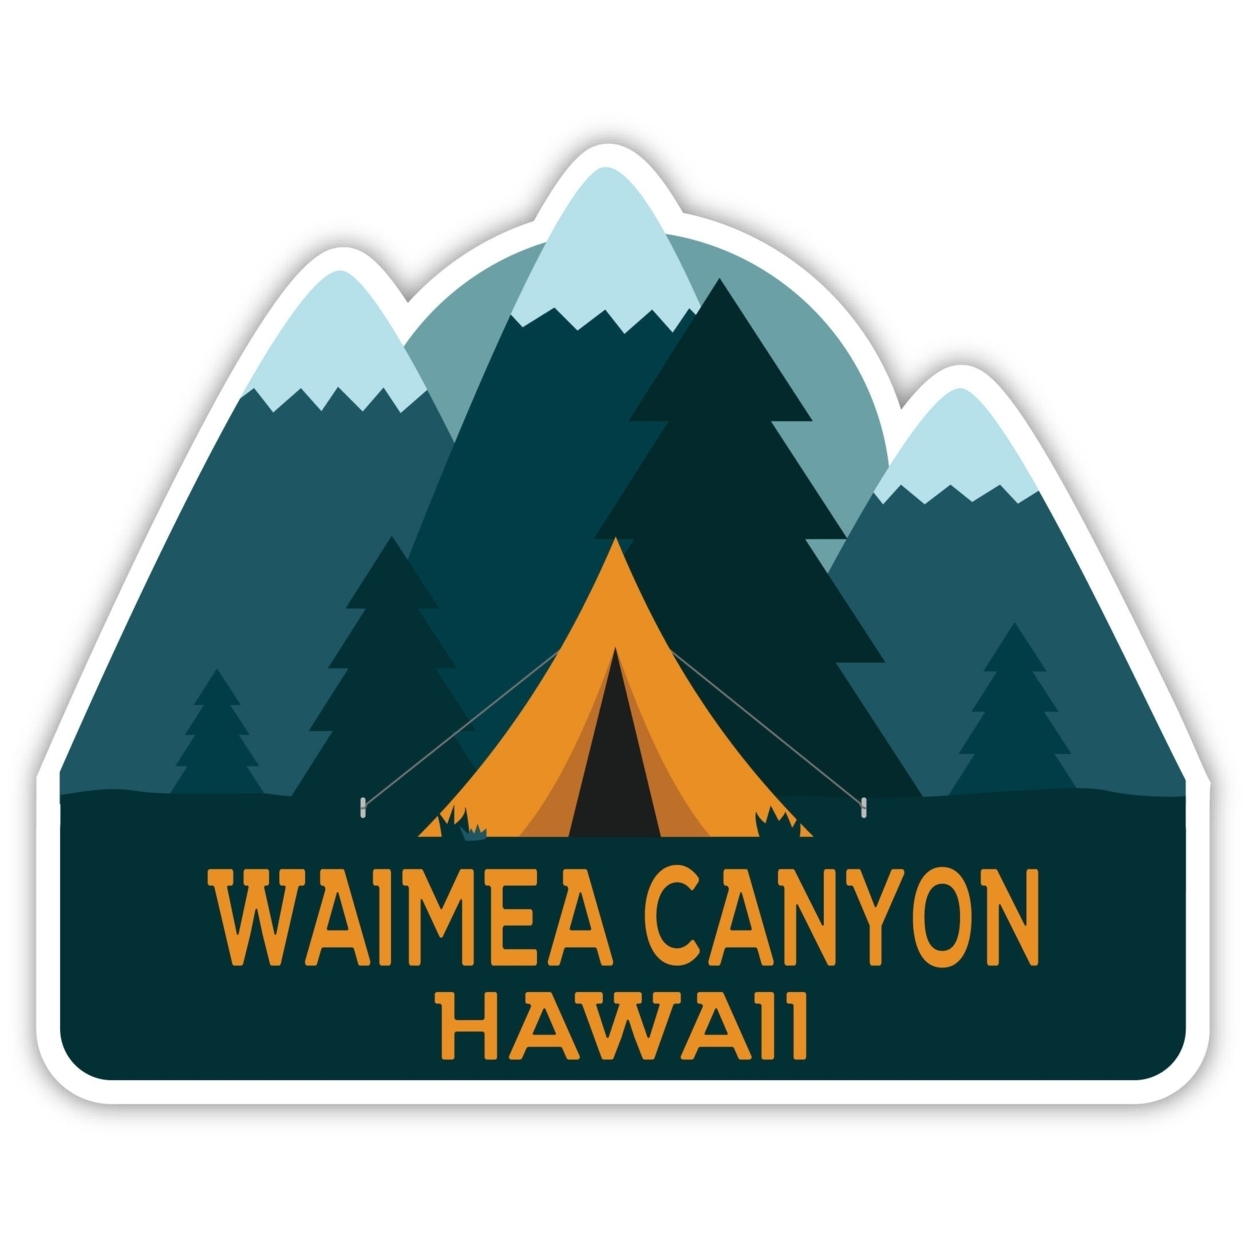 Waimea Canyon Hawaii Souvenir Decorative Stickers (Choose Theme And Size) - Single Unit, 4-Inch, Tent